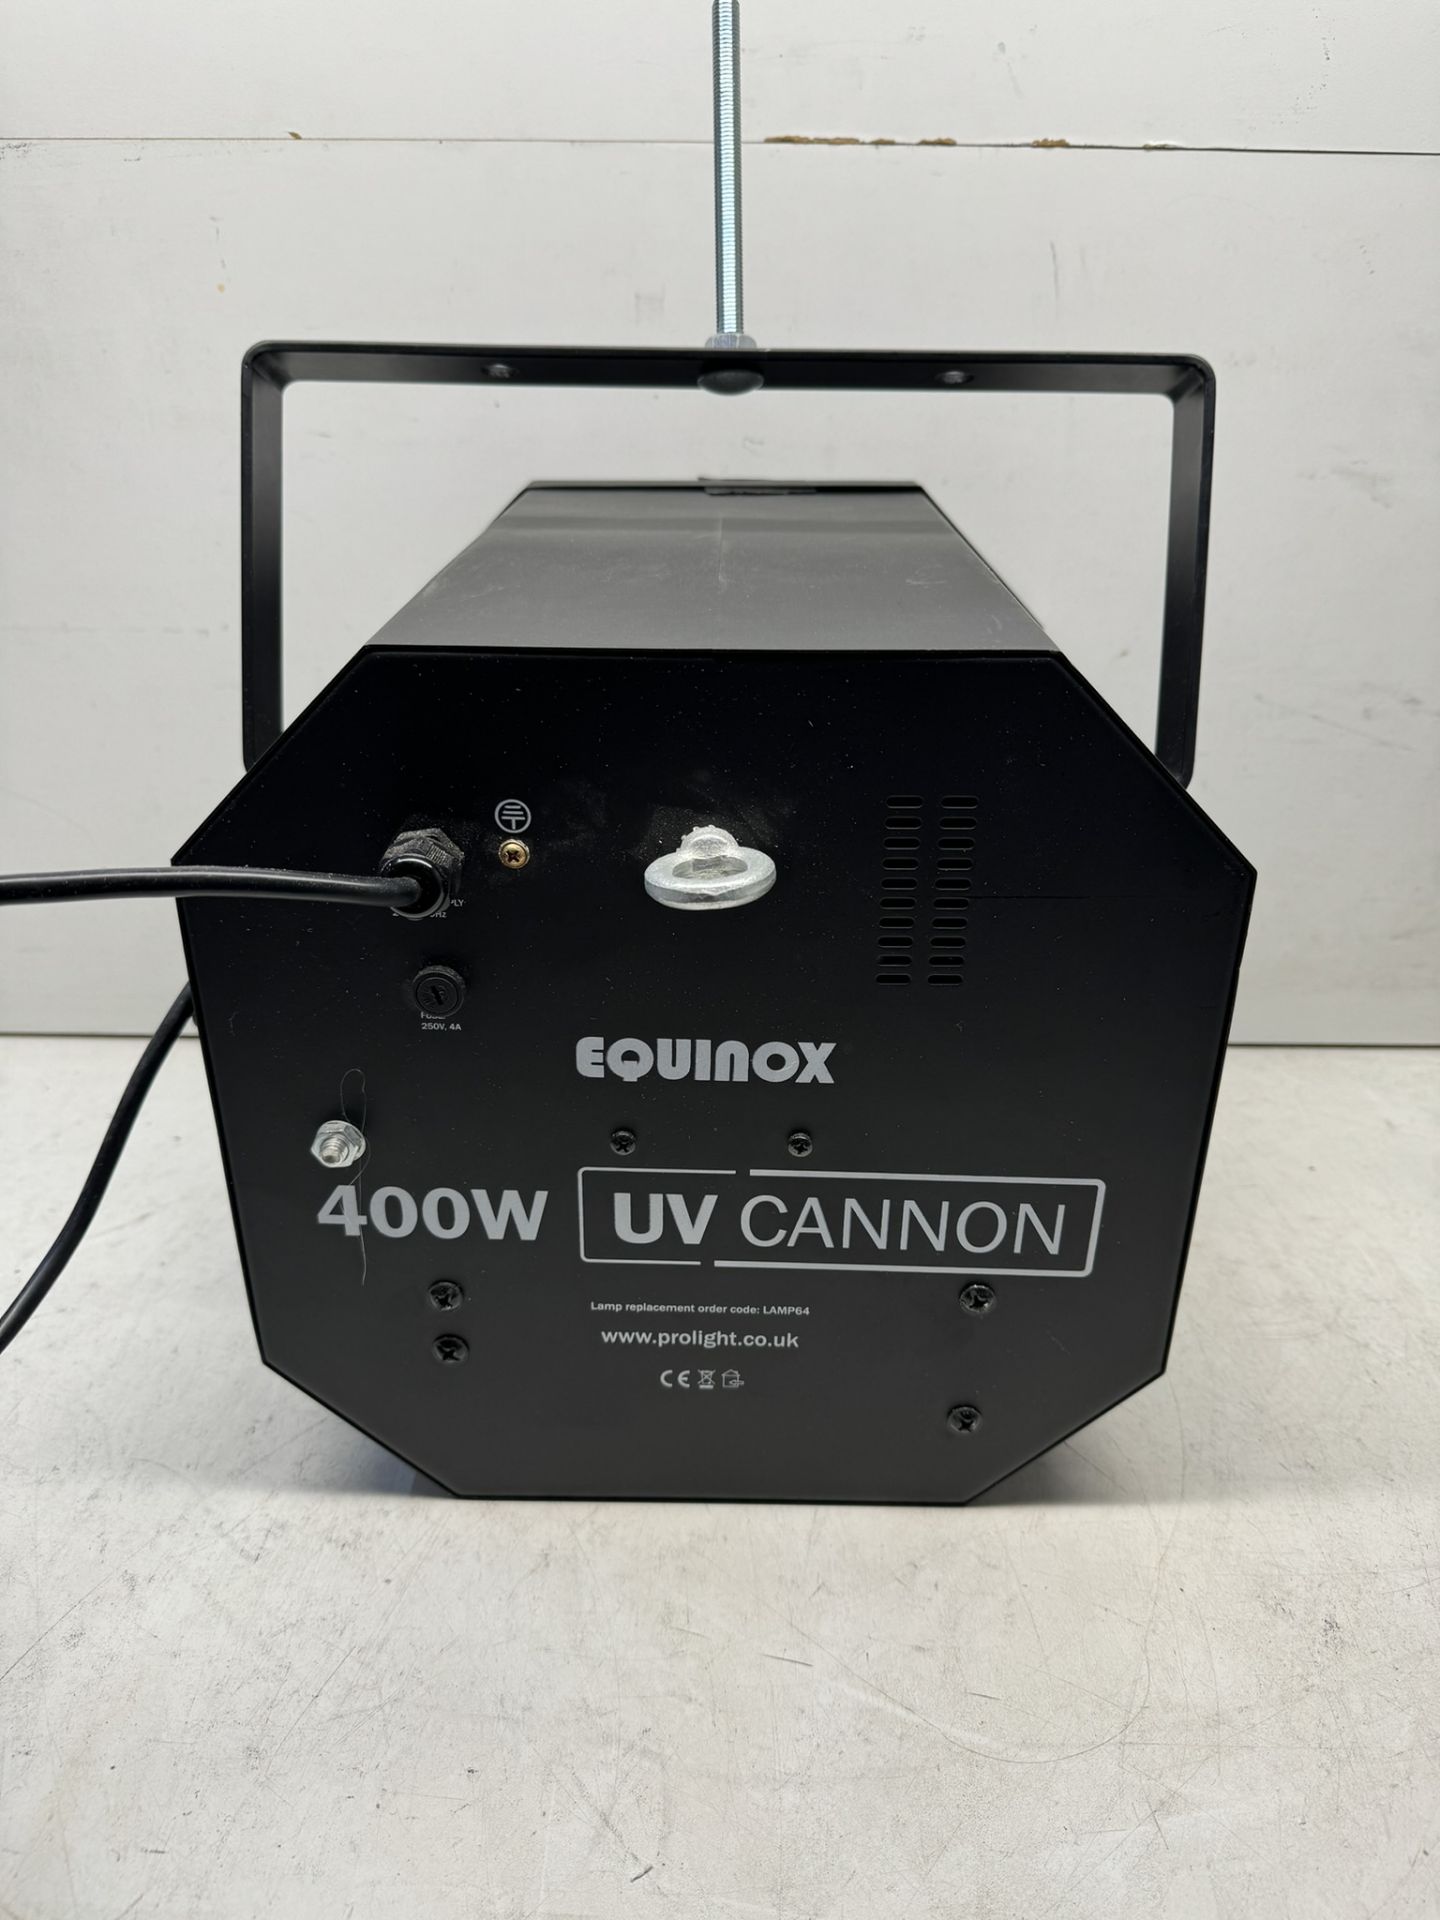 Equinox 400W UV Cannon - Image 4 of 5